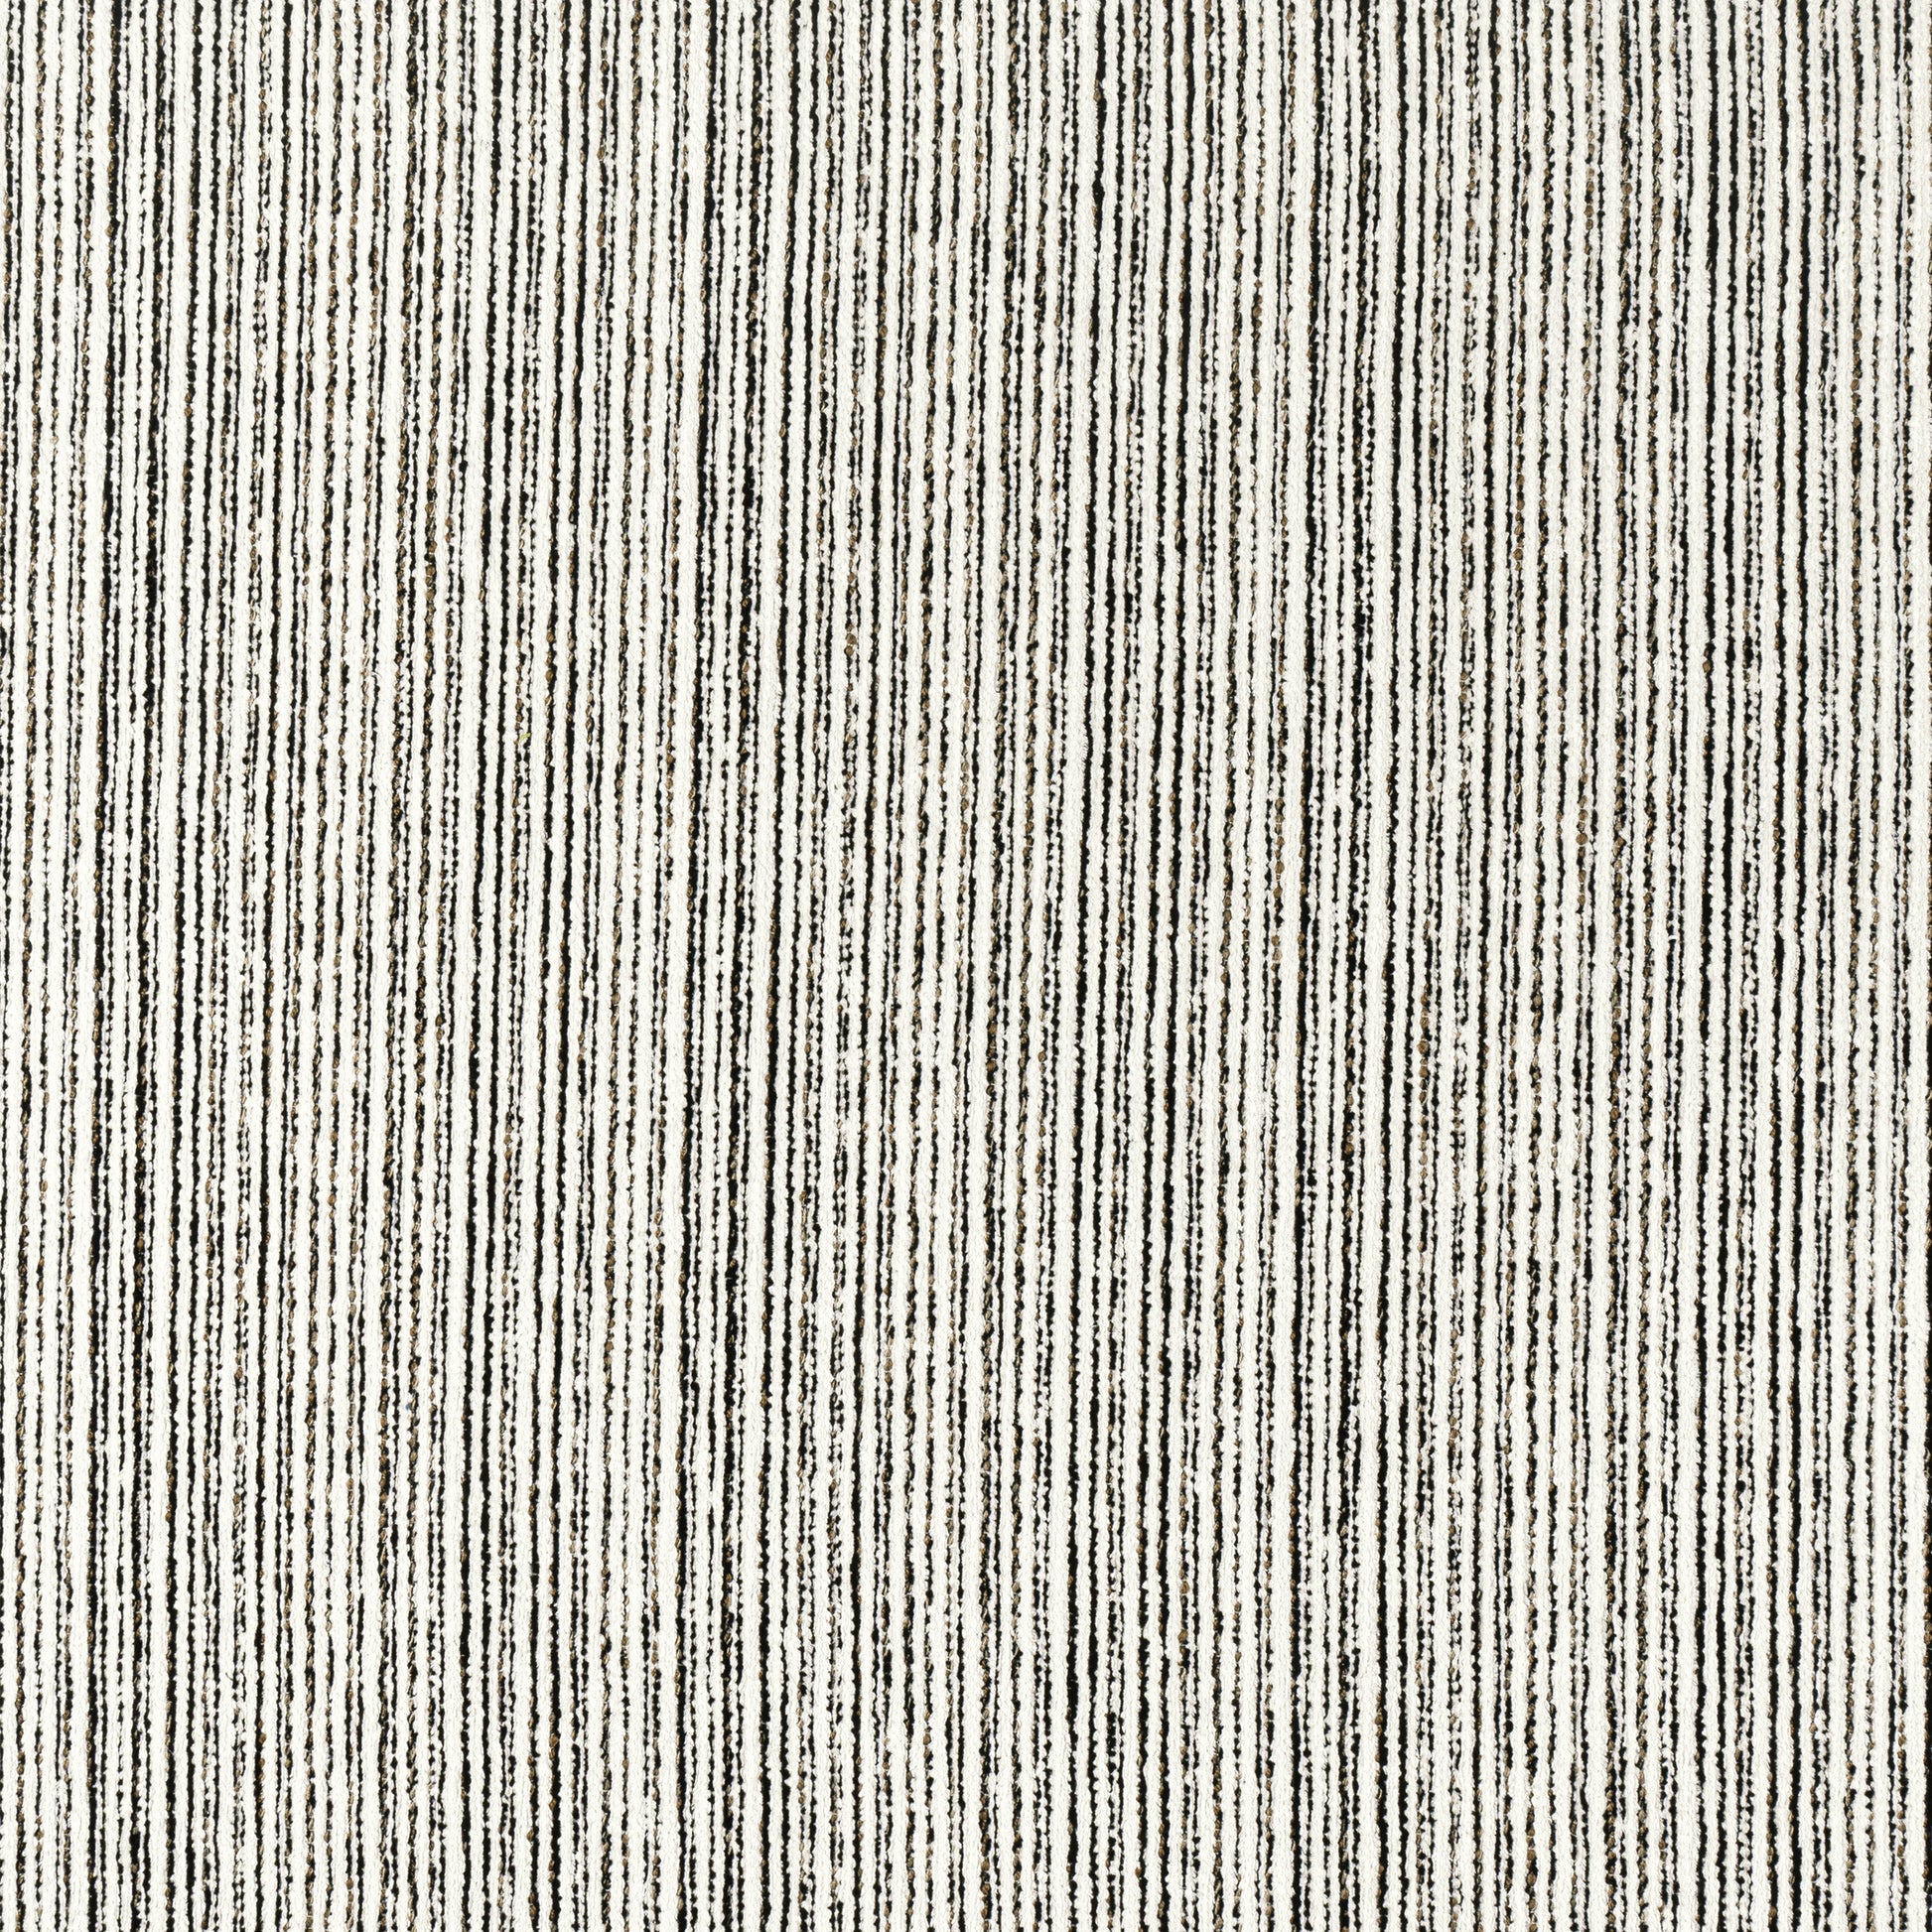 Purchase Thibaut Fabric Item# W8807 pattern name Zia Stripe color Ebony